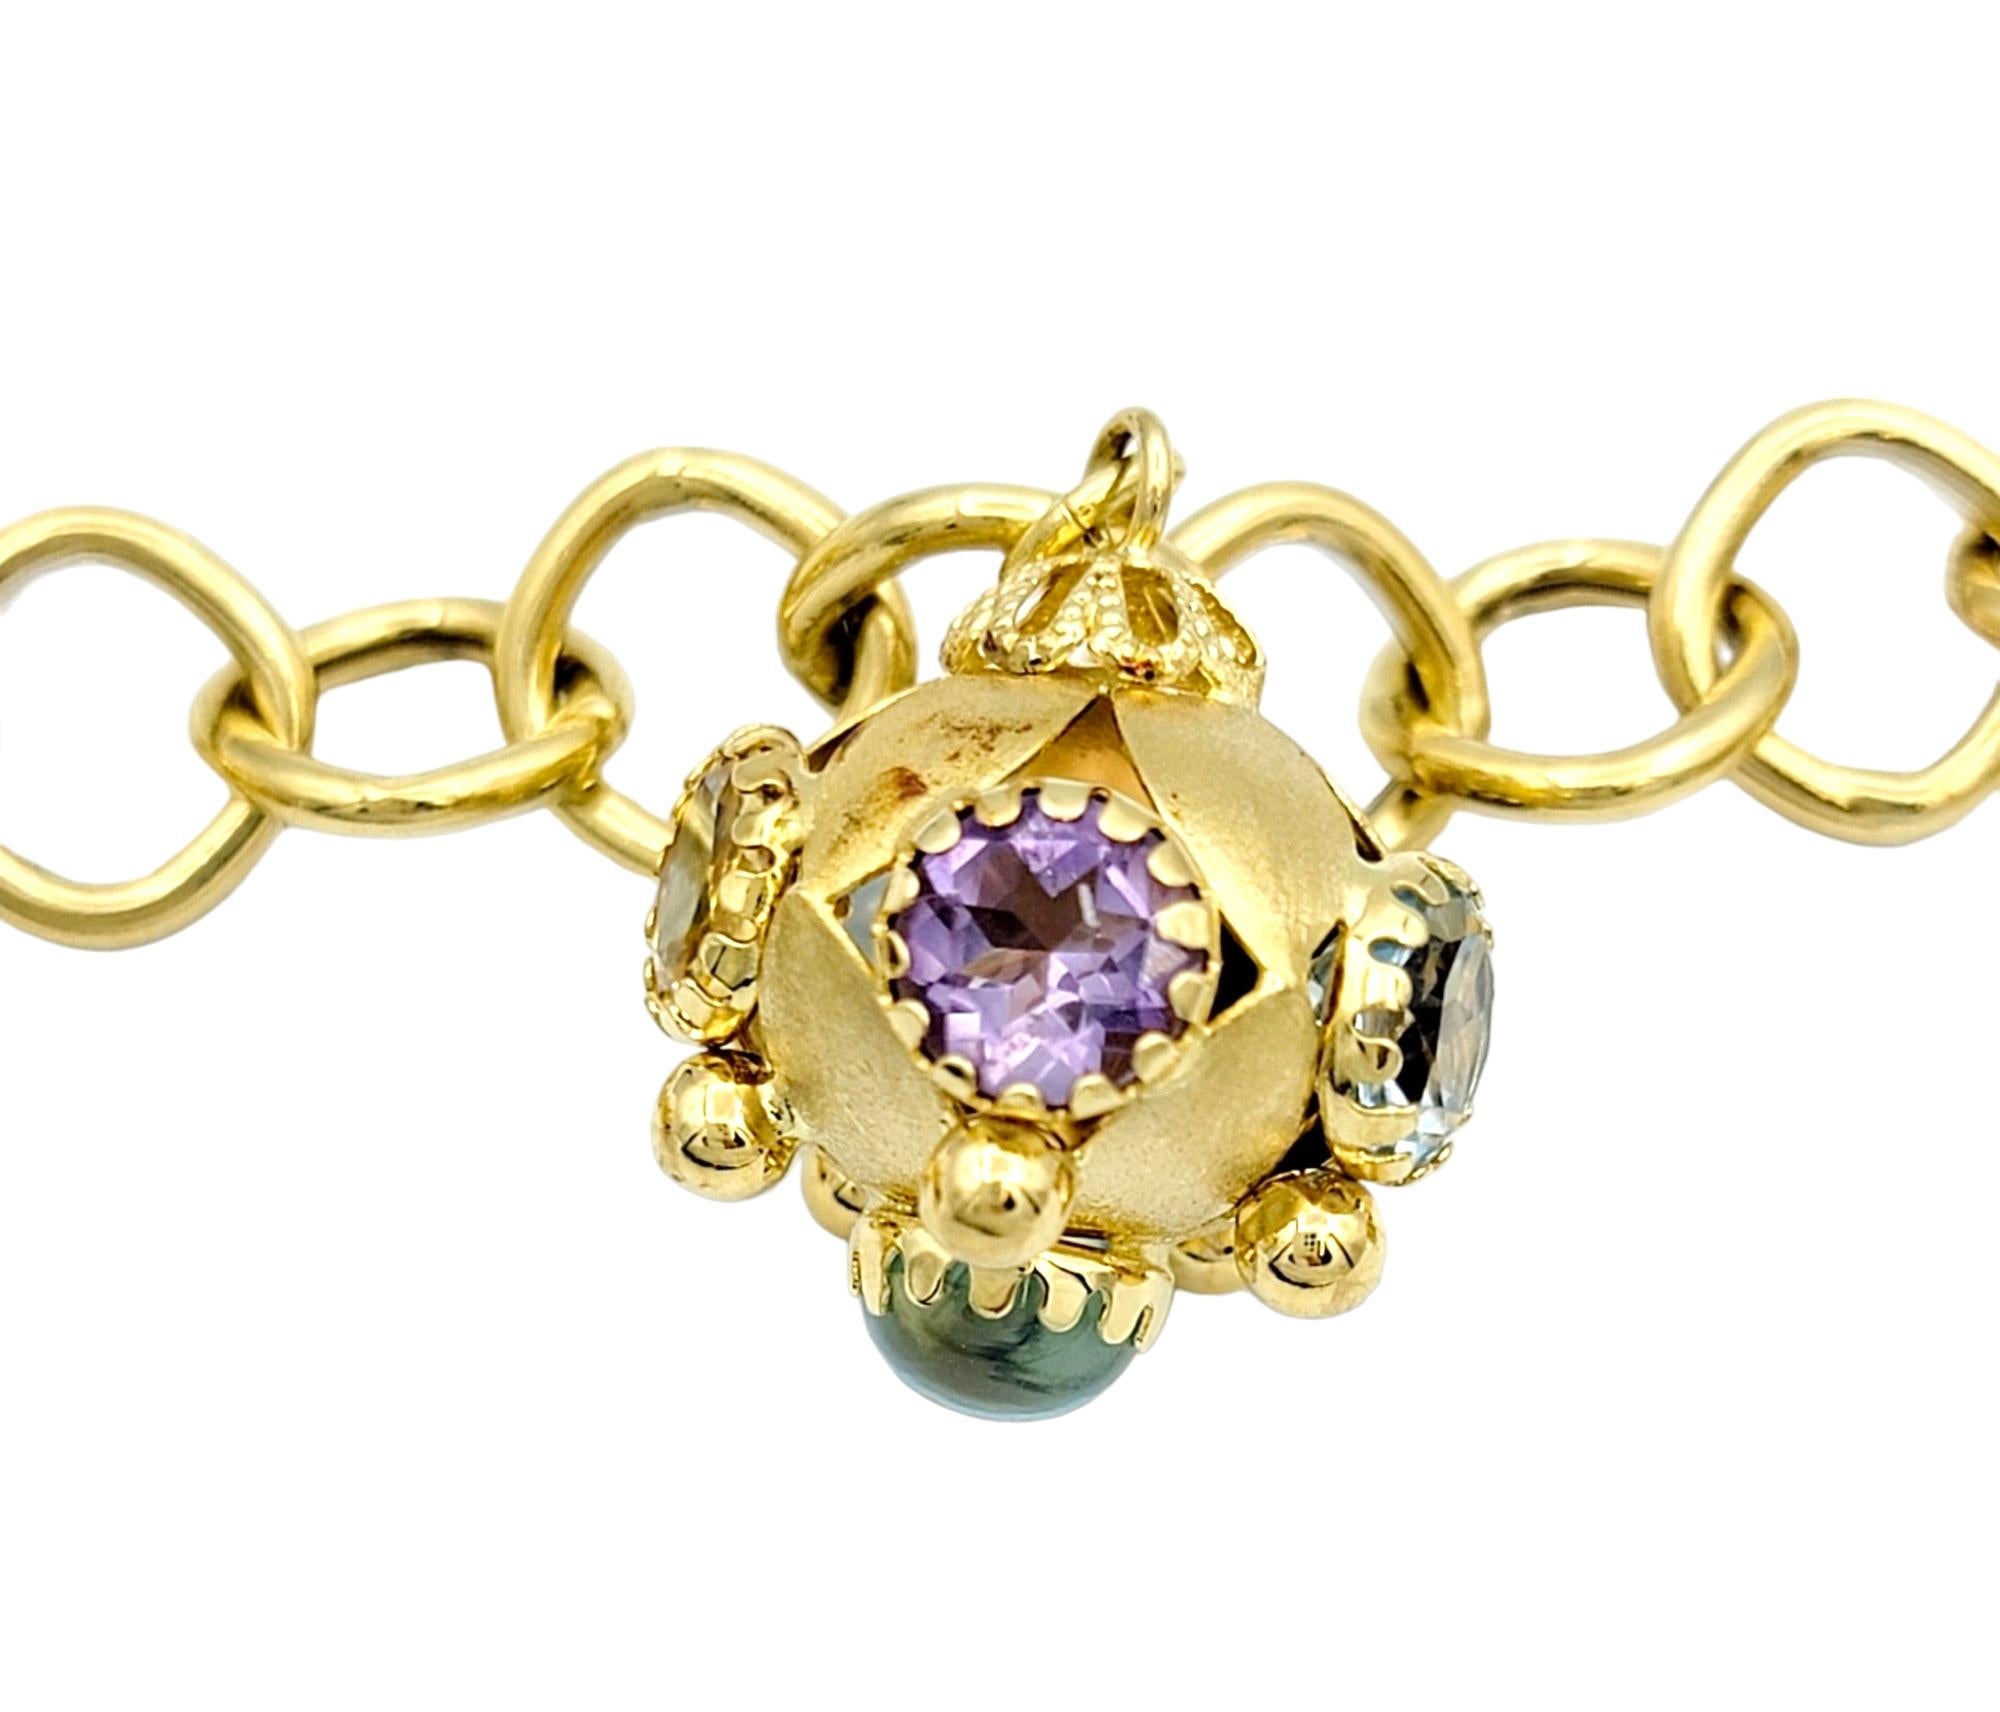 18 karat gold charm bracelet